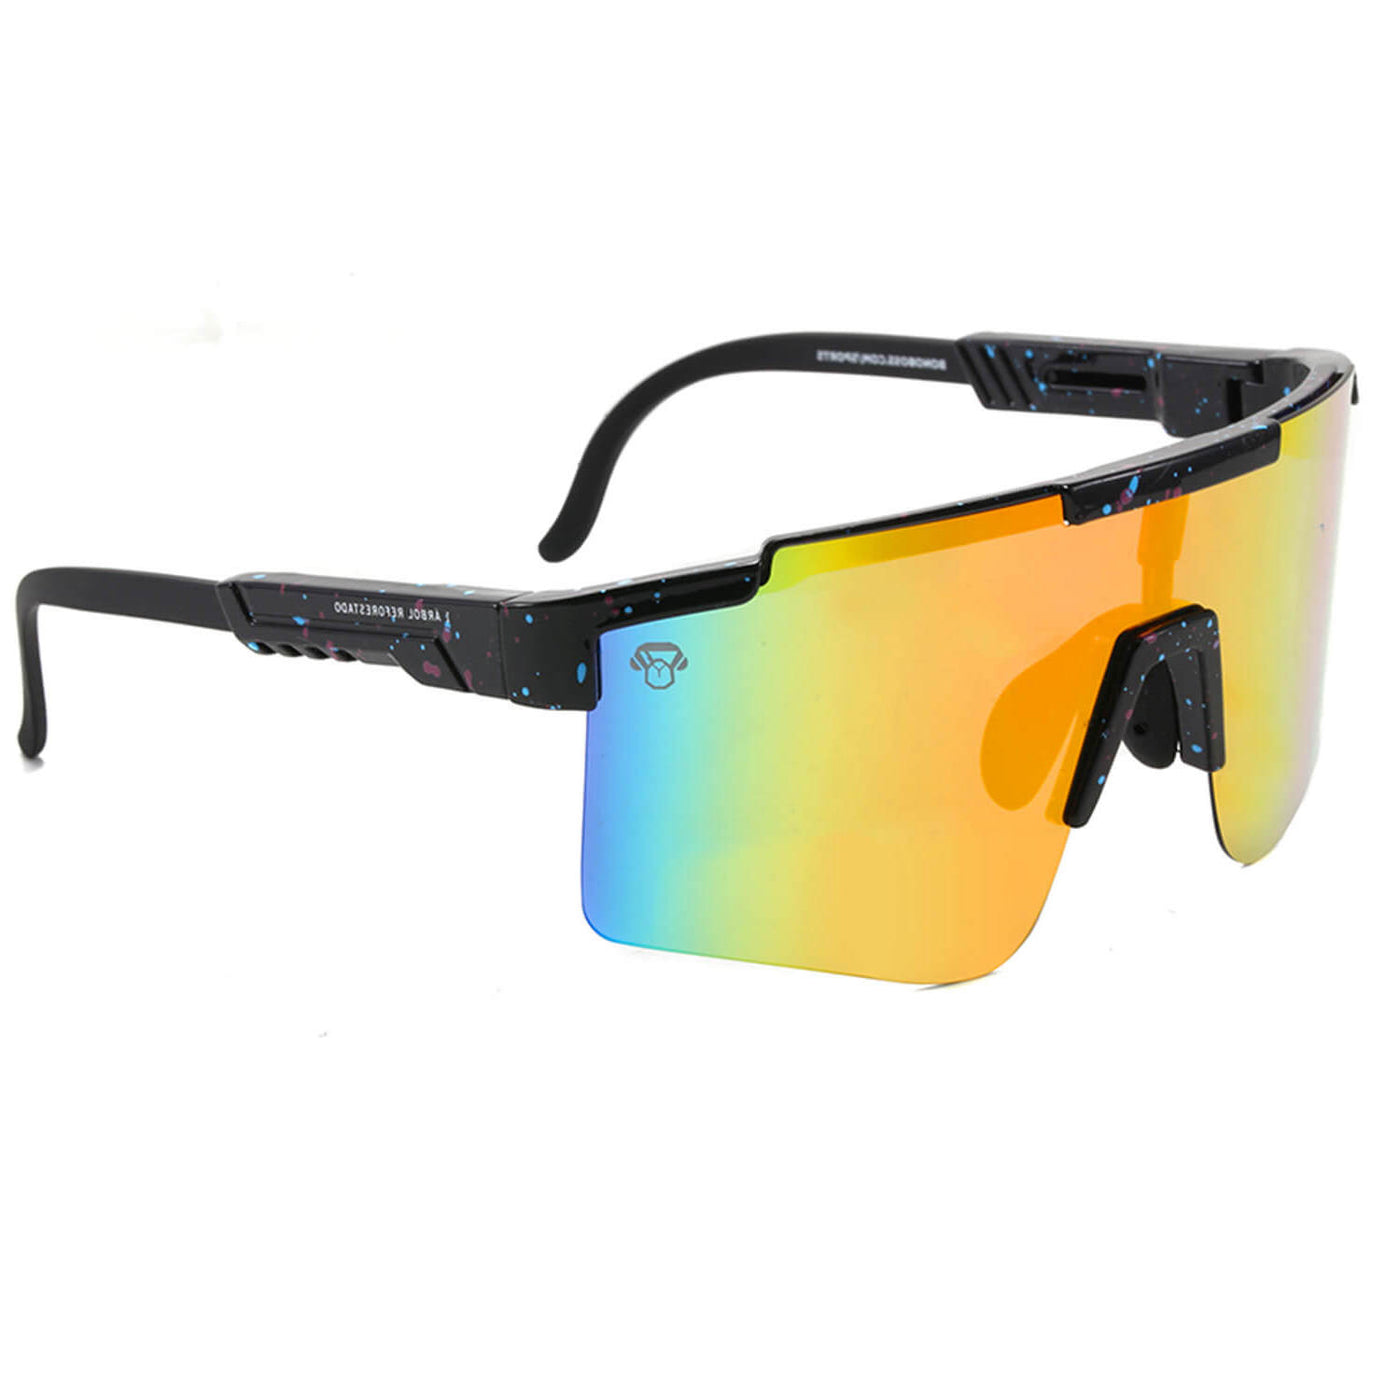 anteojos de sol polarizados de color negro con lentes espejadas tornasol para hombre que le gusta andar en bicicleta